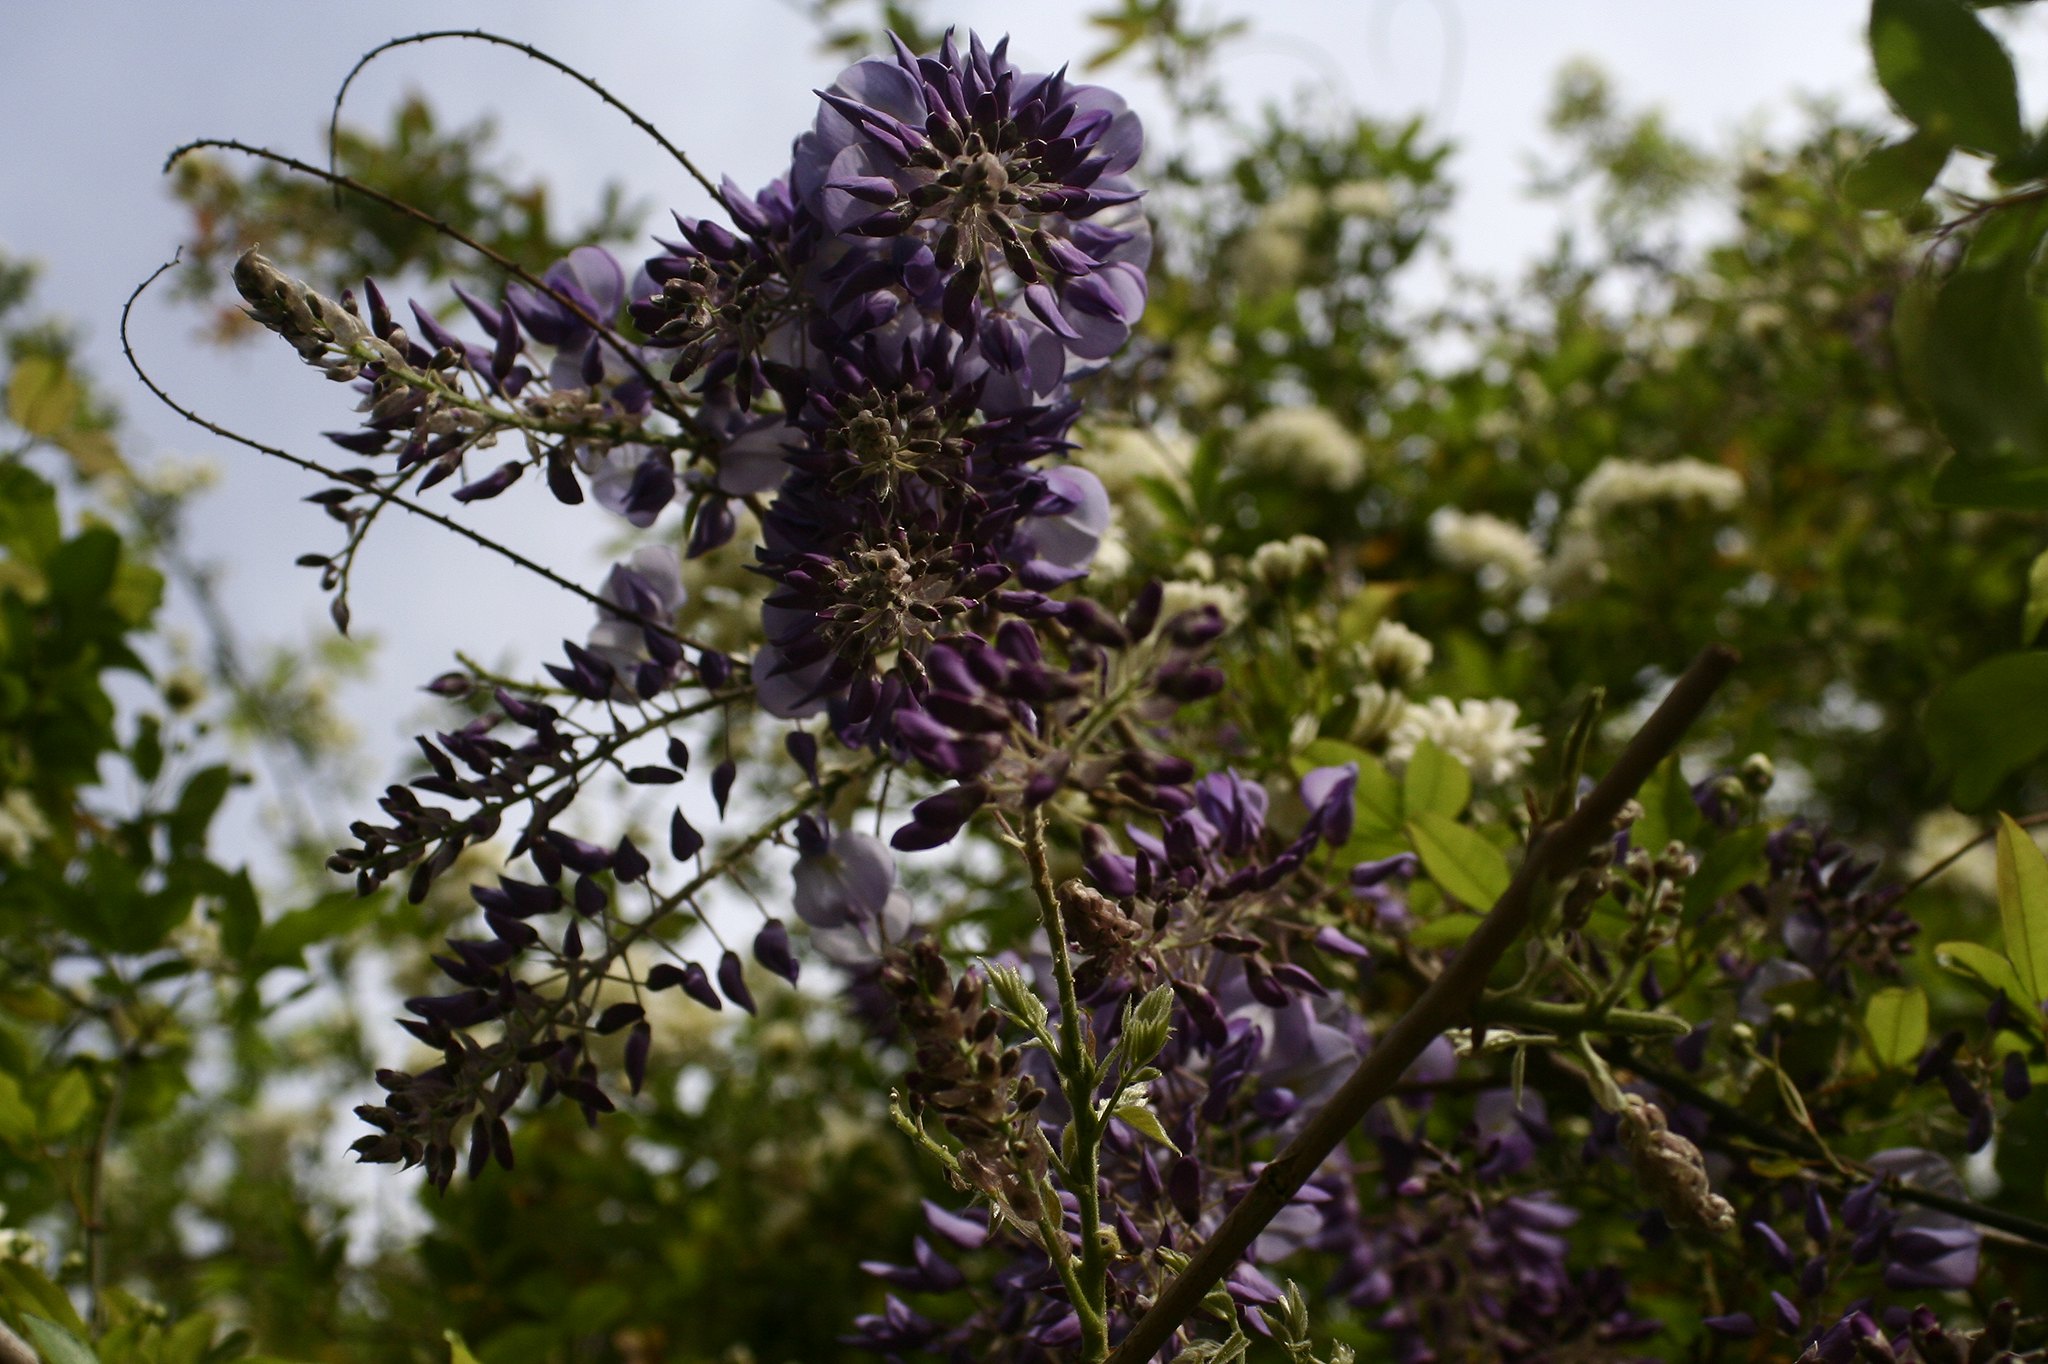 The start of wisteria season